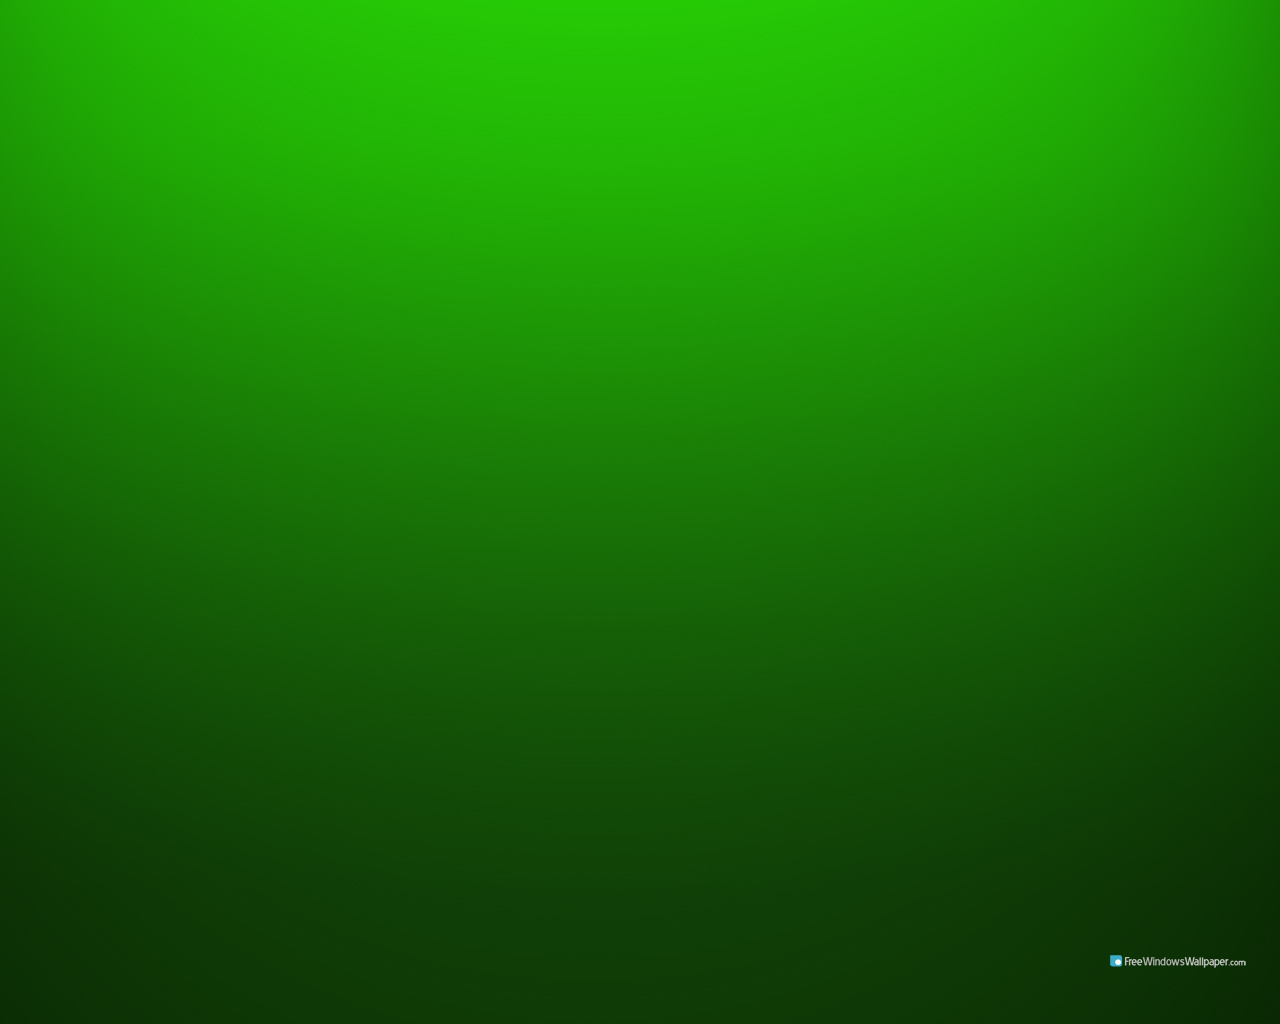 1280x1024 Green Desktop Wallpaper For Windows